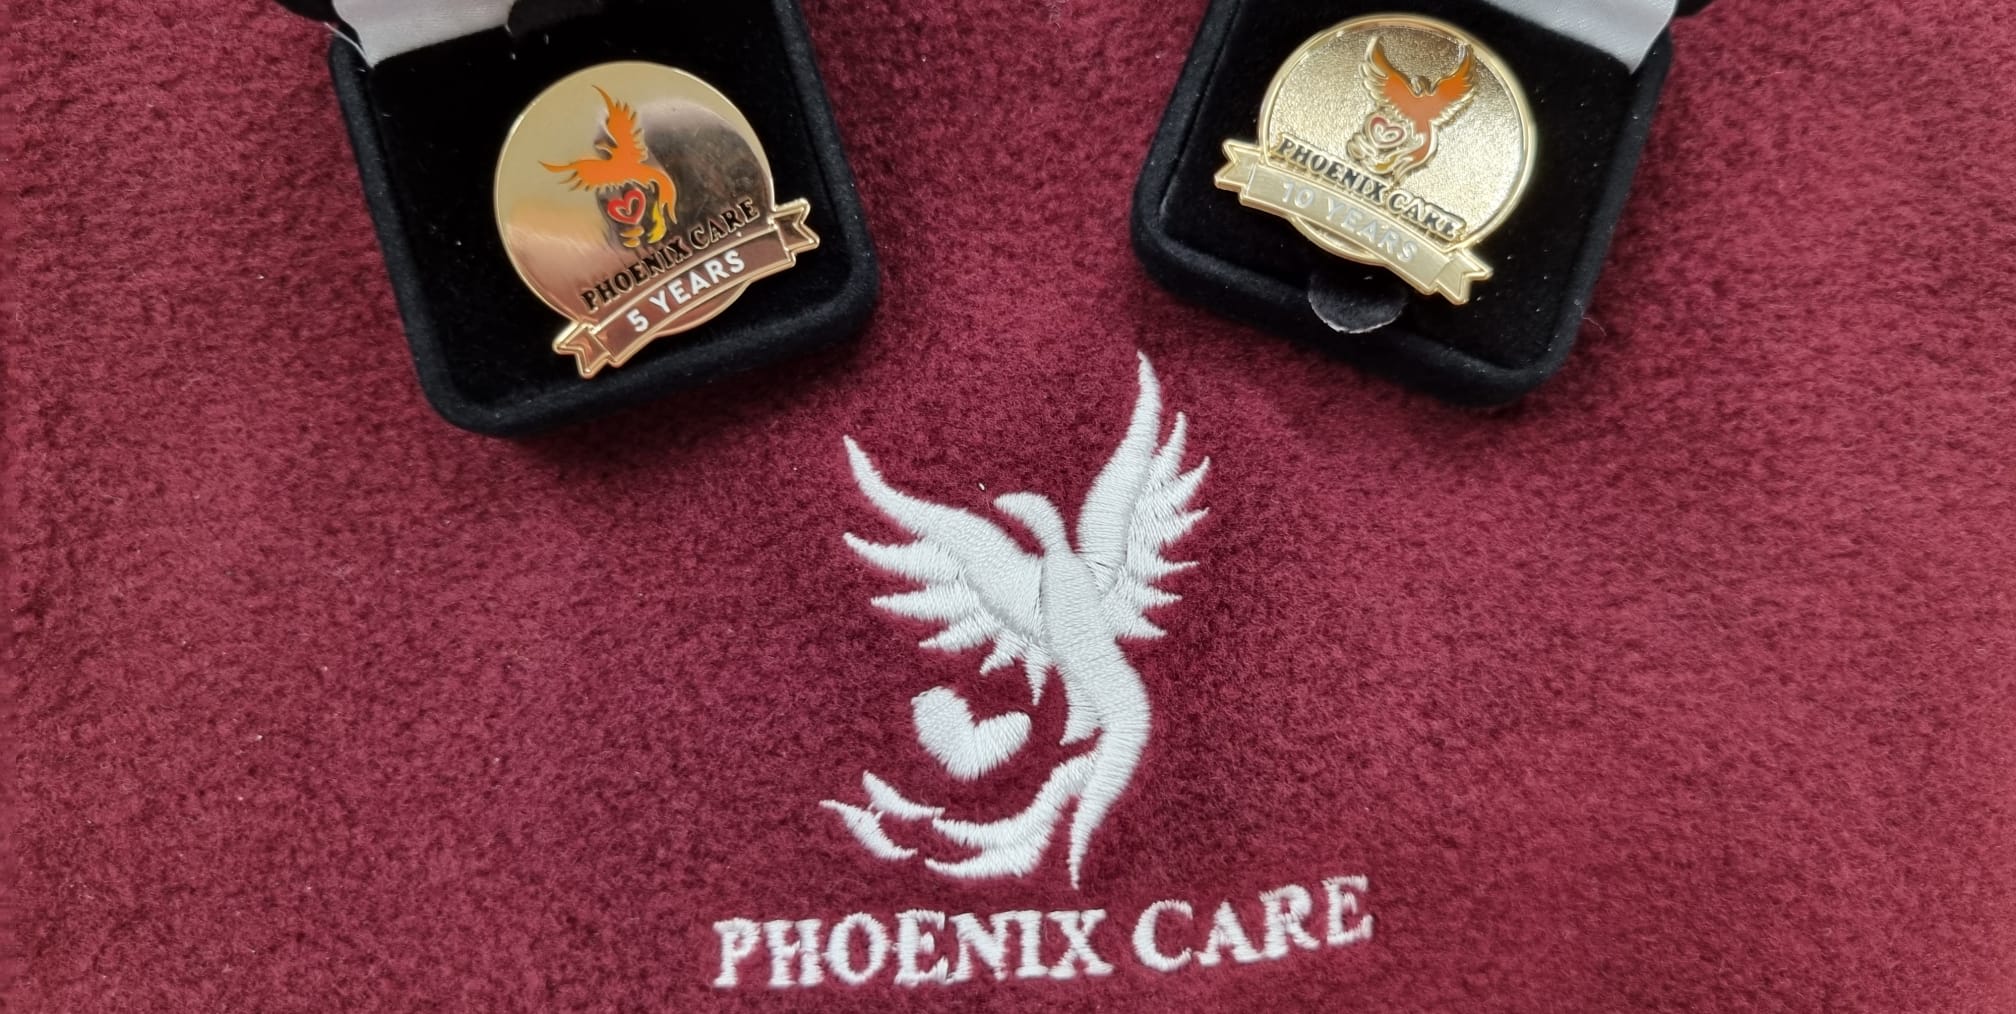 Phoenix Care (Havering) Ltd Romford 01708 607869